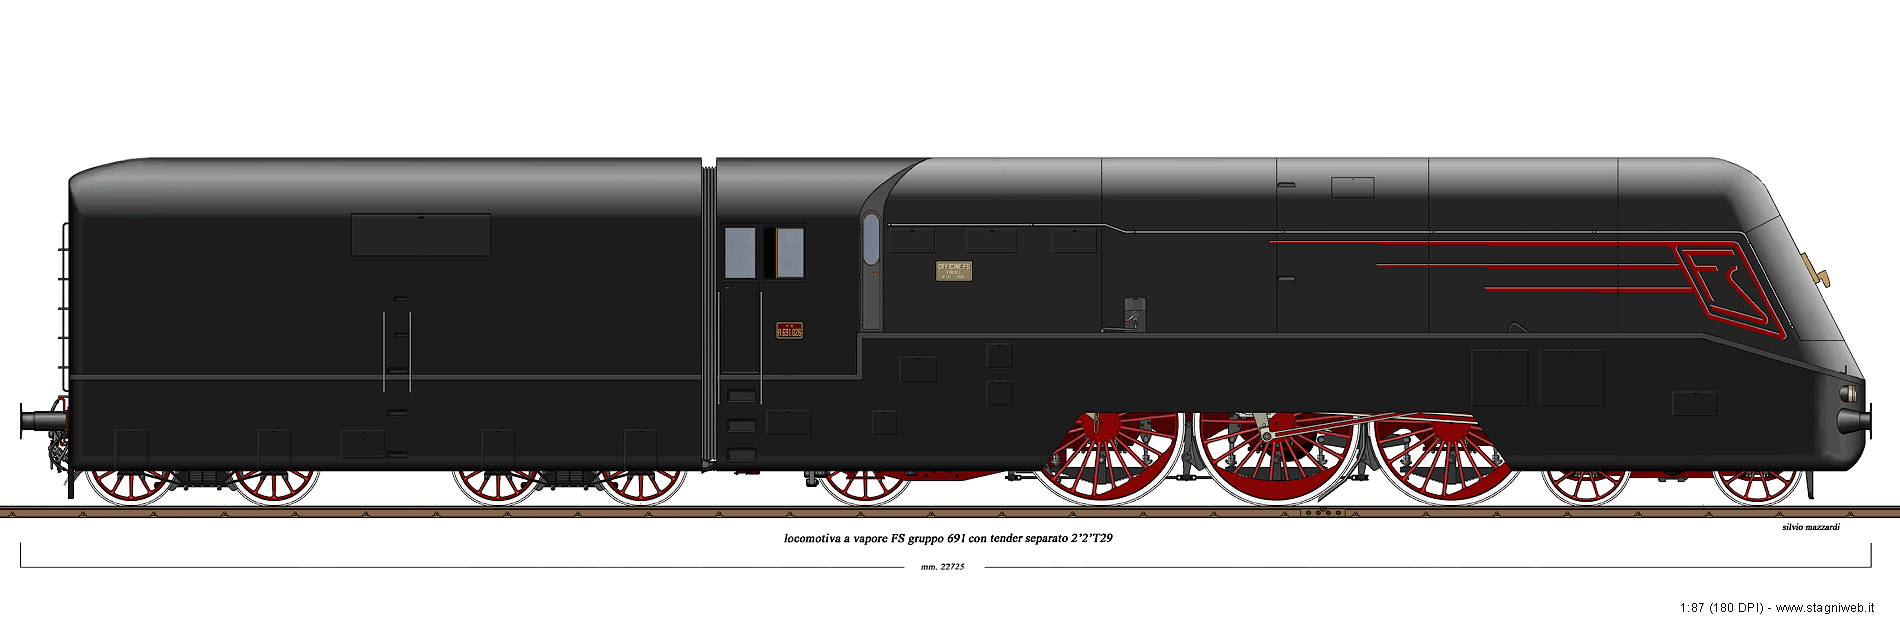 Locomotive a vapore - A.691.026